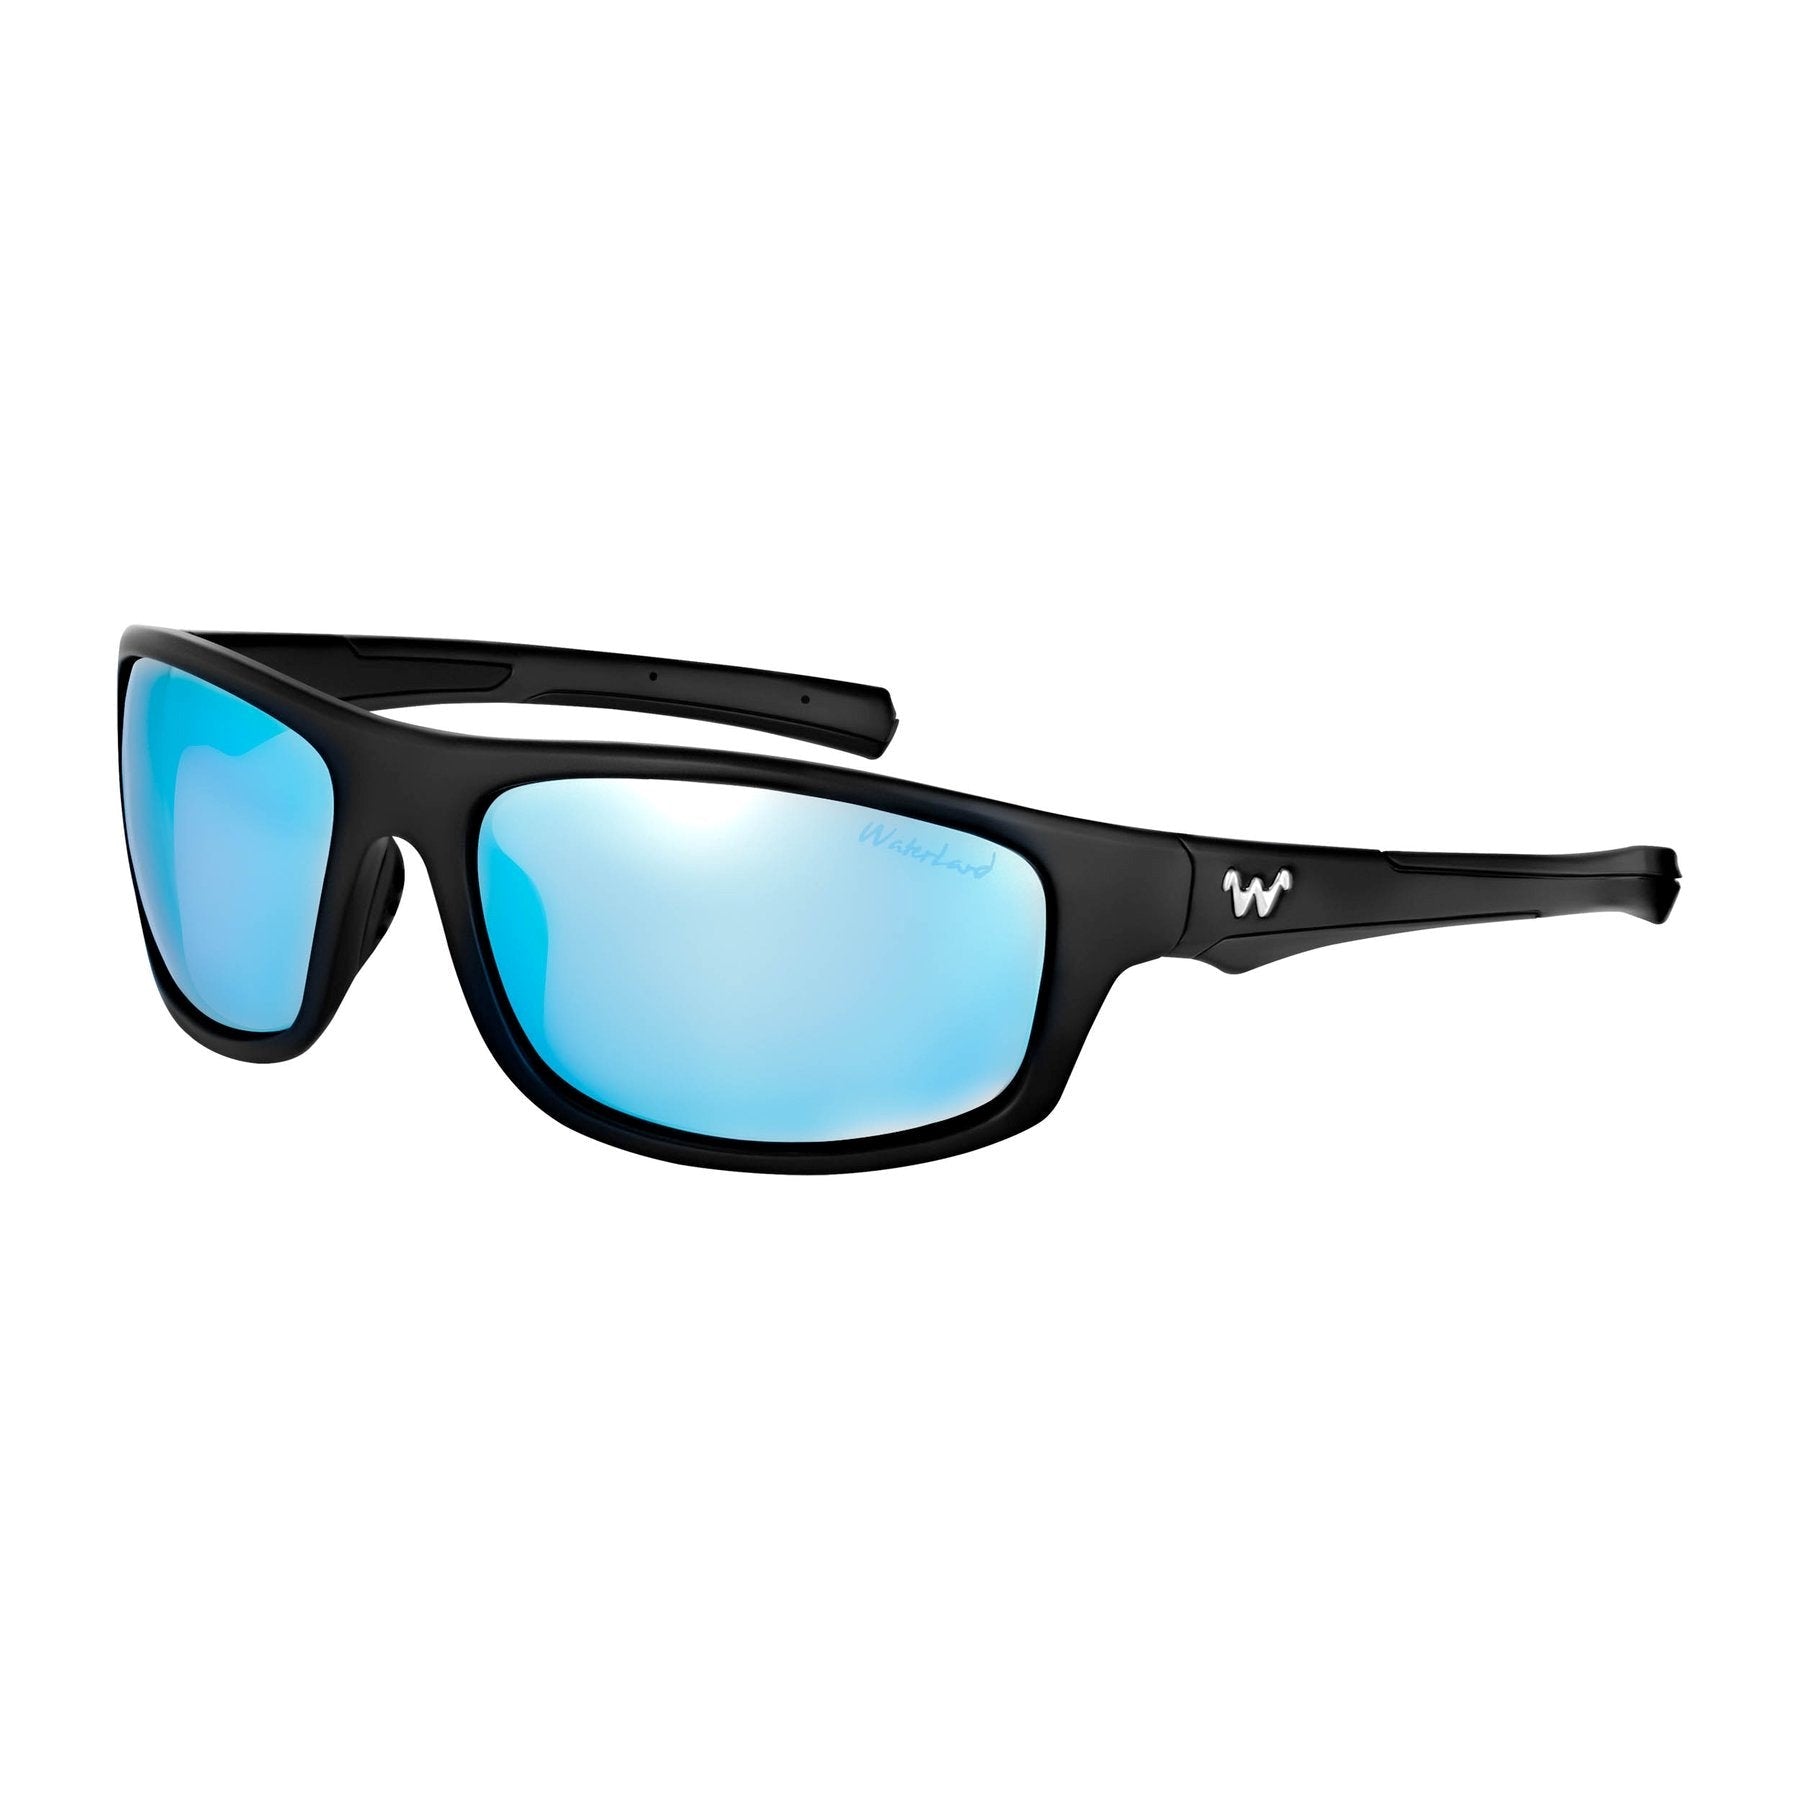 Waterland Hasket Sunglasses Black/Blue Mirror